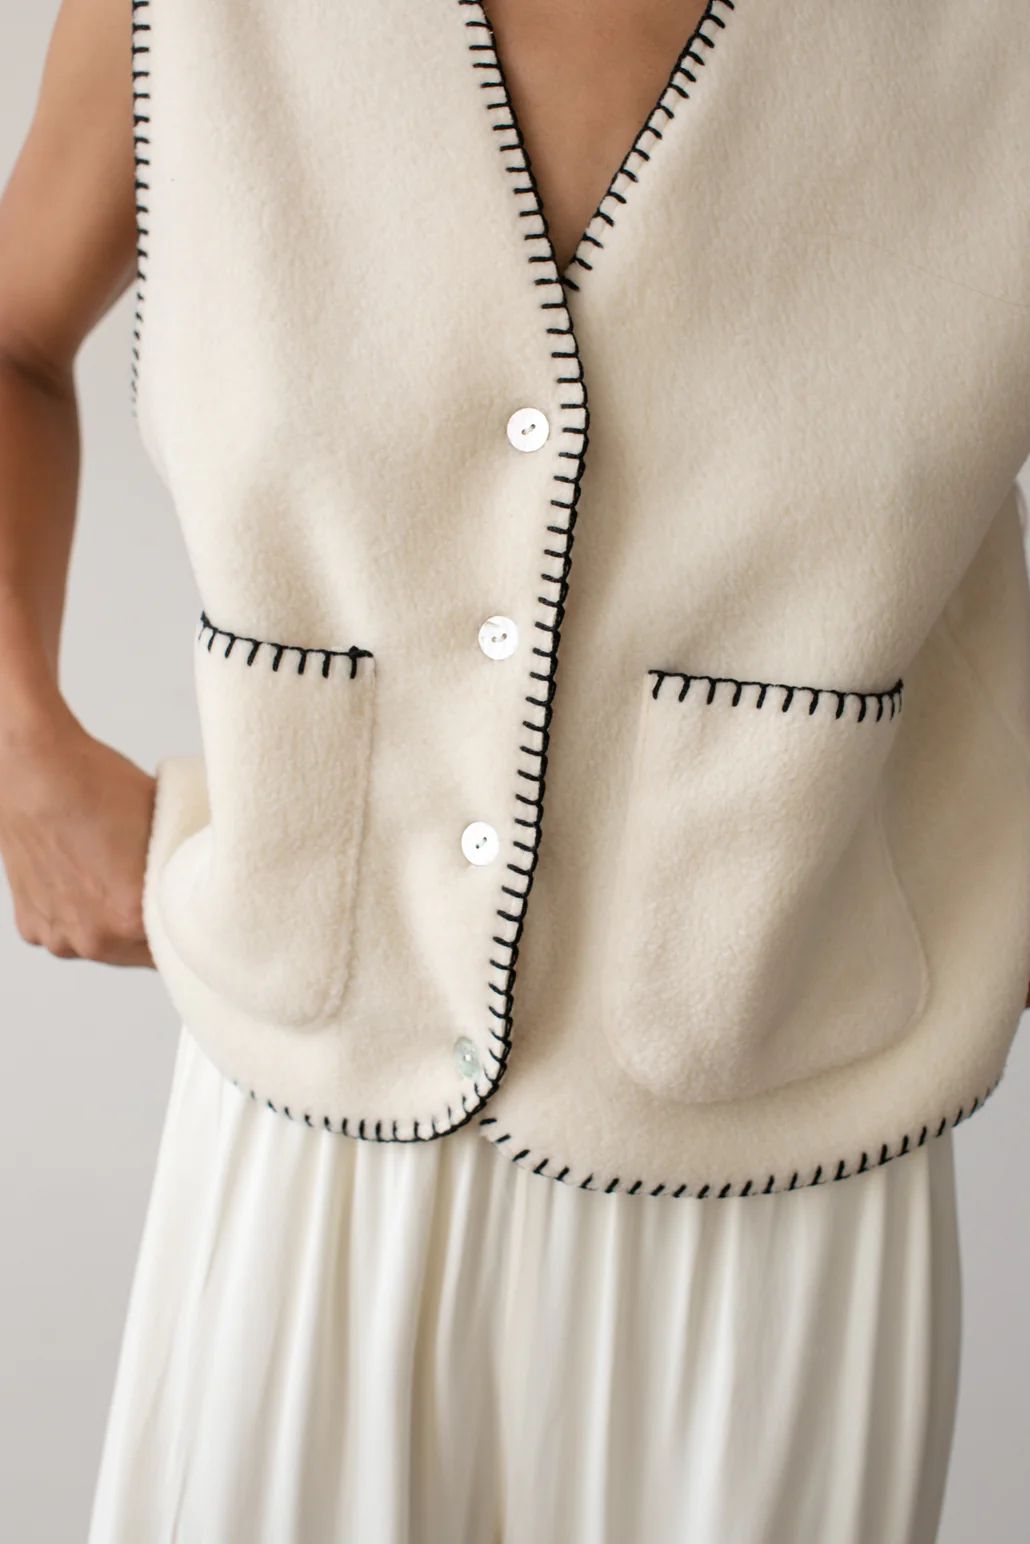 The Polar Fleece Stitch Vest | DONNI.